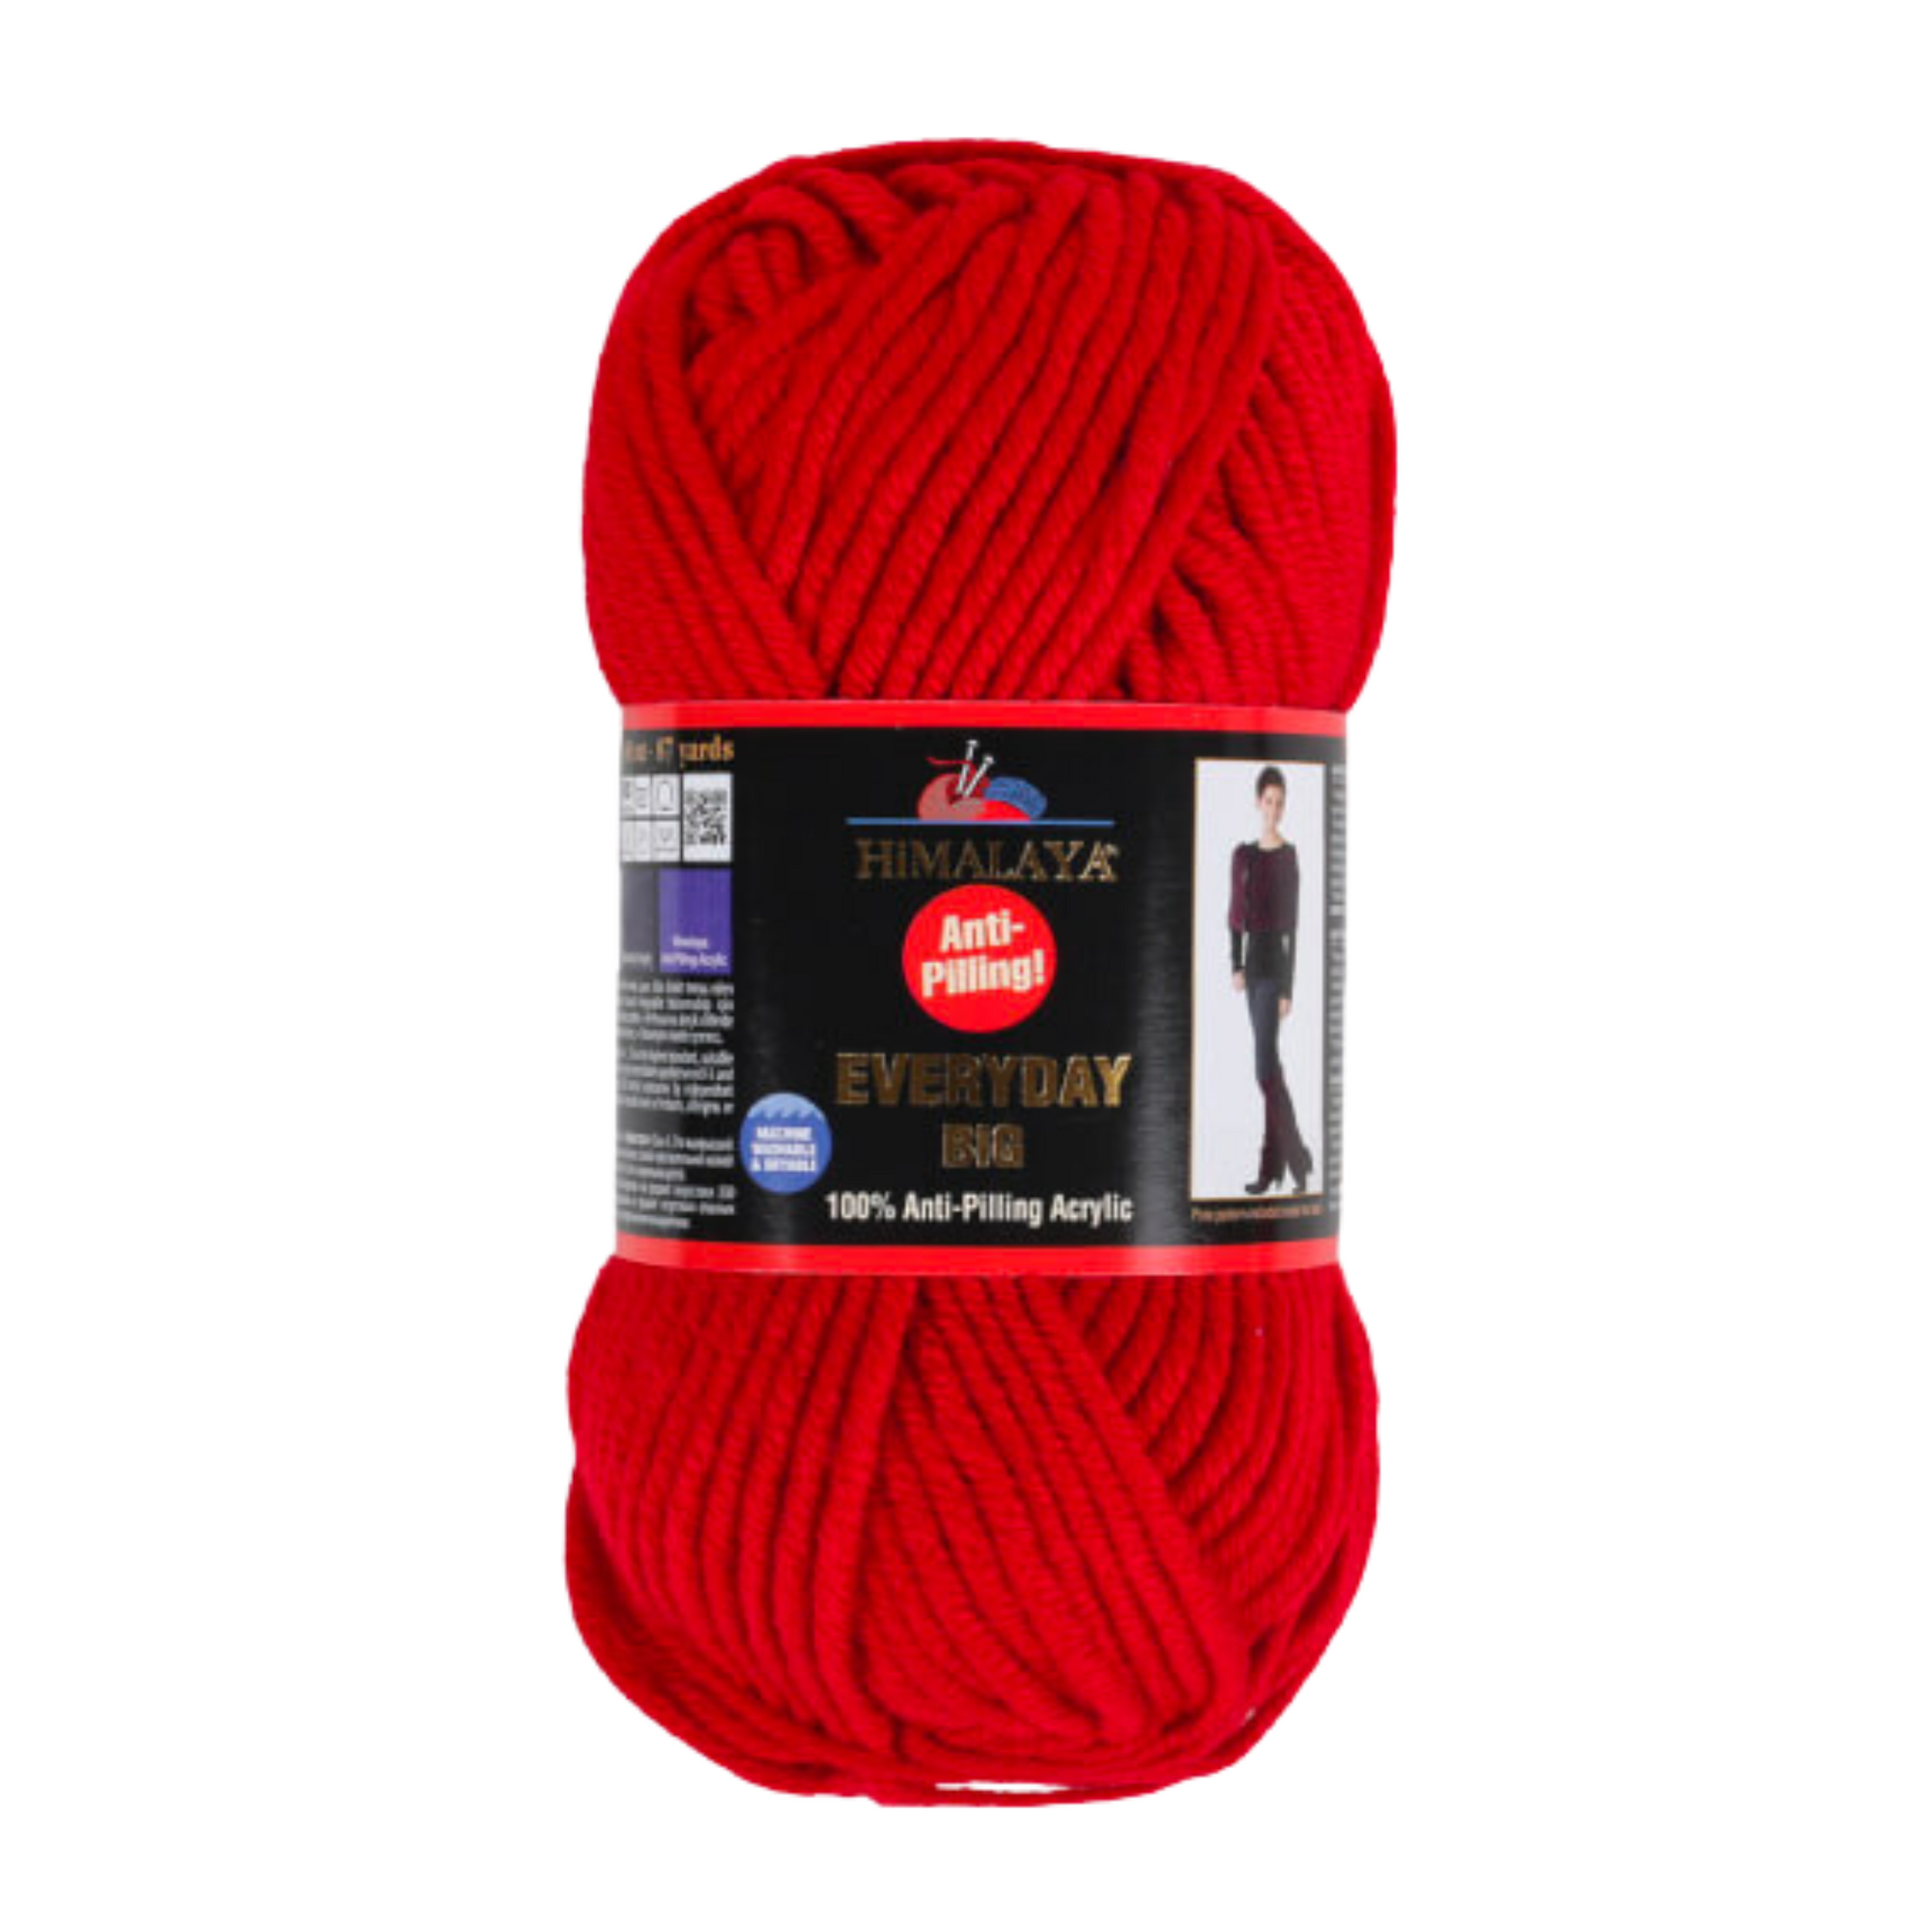 Himalaya Everyday 100% Anti-Pilling Acrylic Yarn, Pinkish Red - 70812